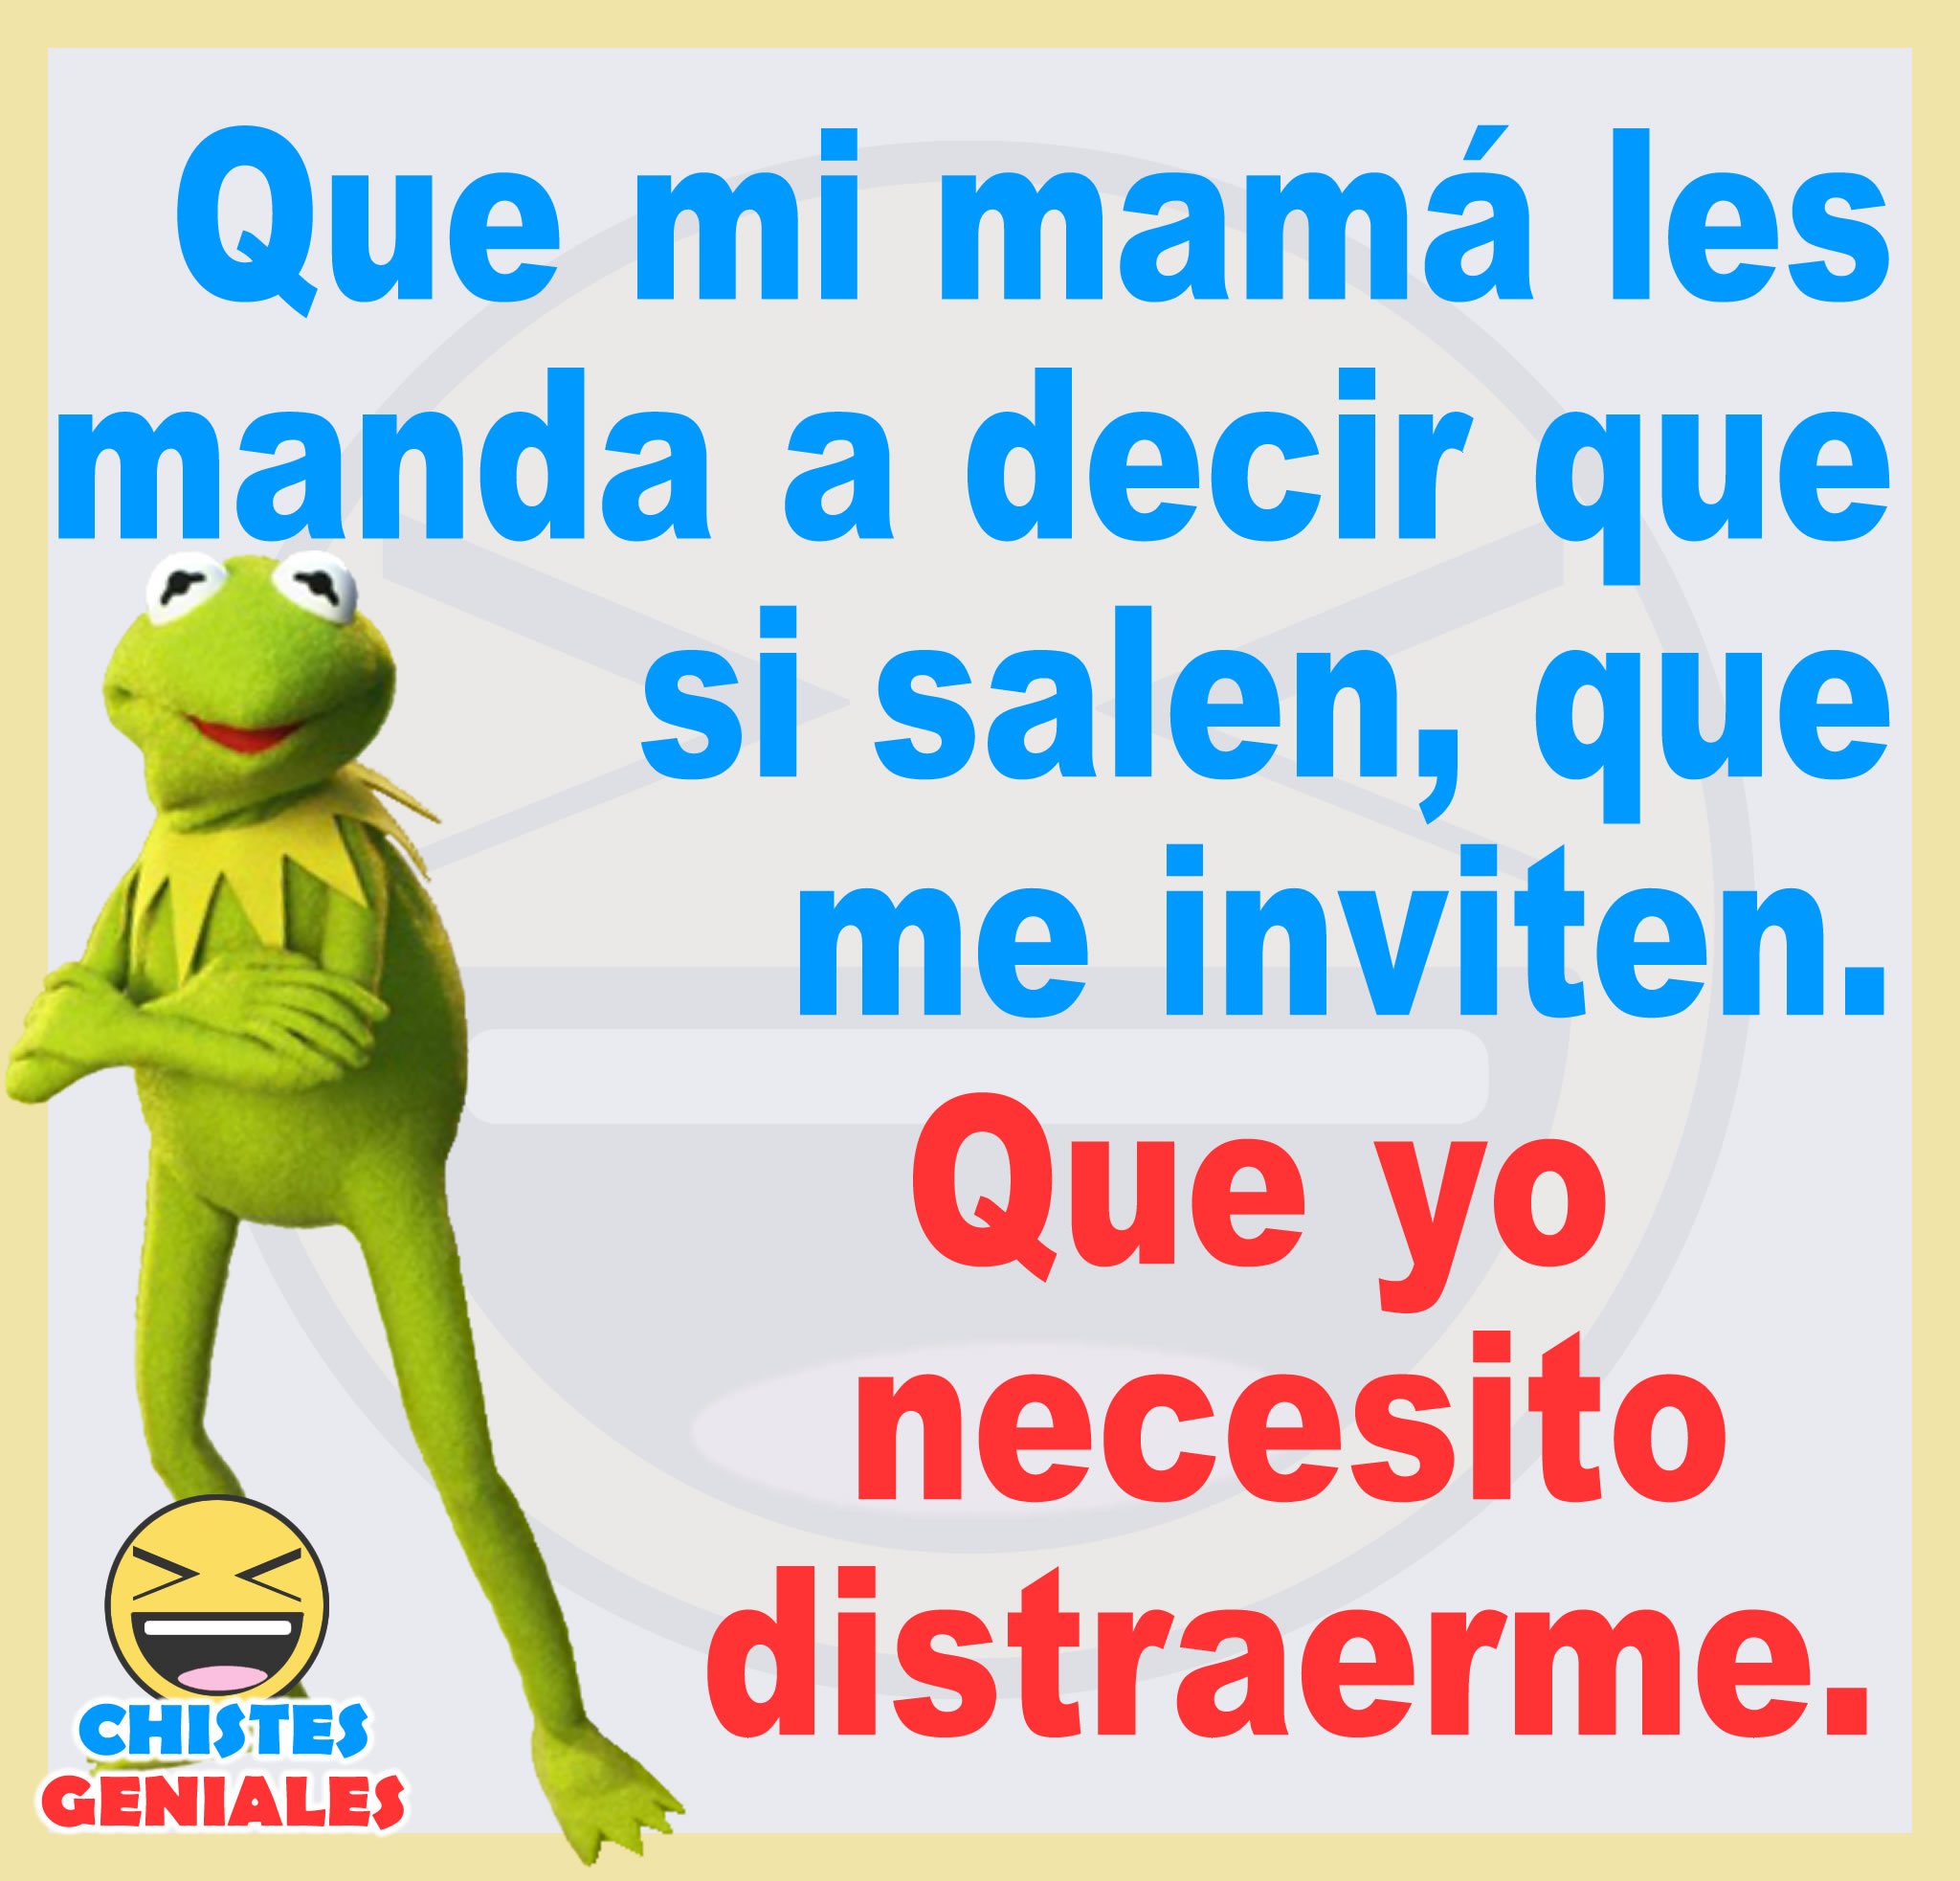 tipo Gemidos apoyo Chistes Geniales on Twitter: "Mi mamá dice que.... https://t.co/LnKRJsbqR7"  / Twitter